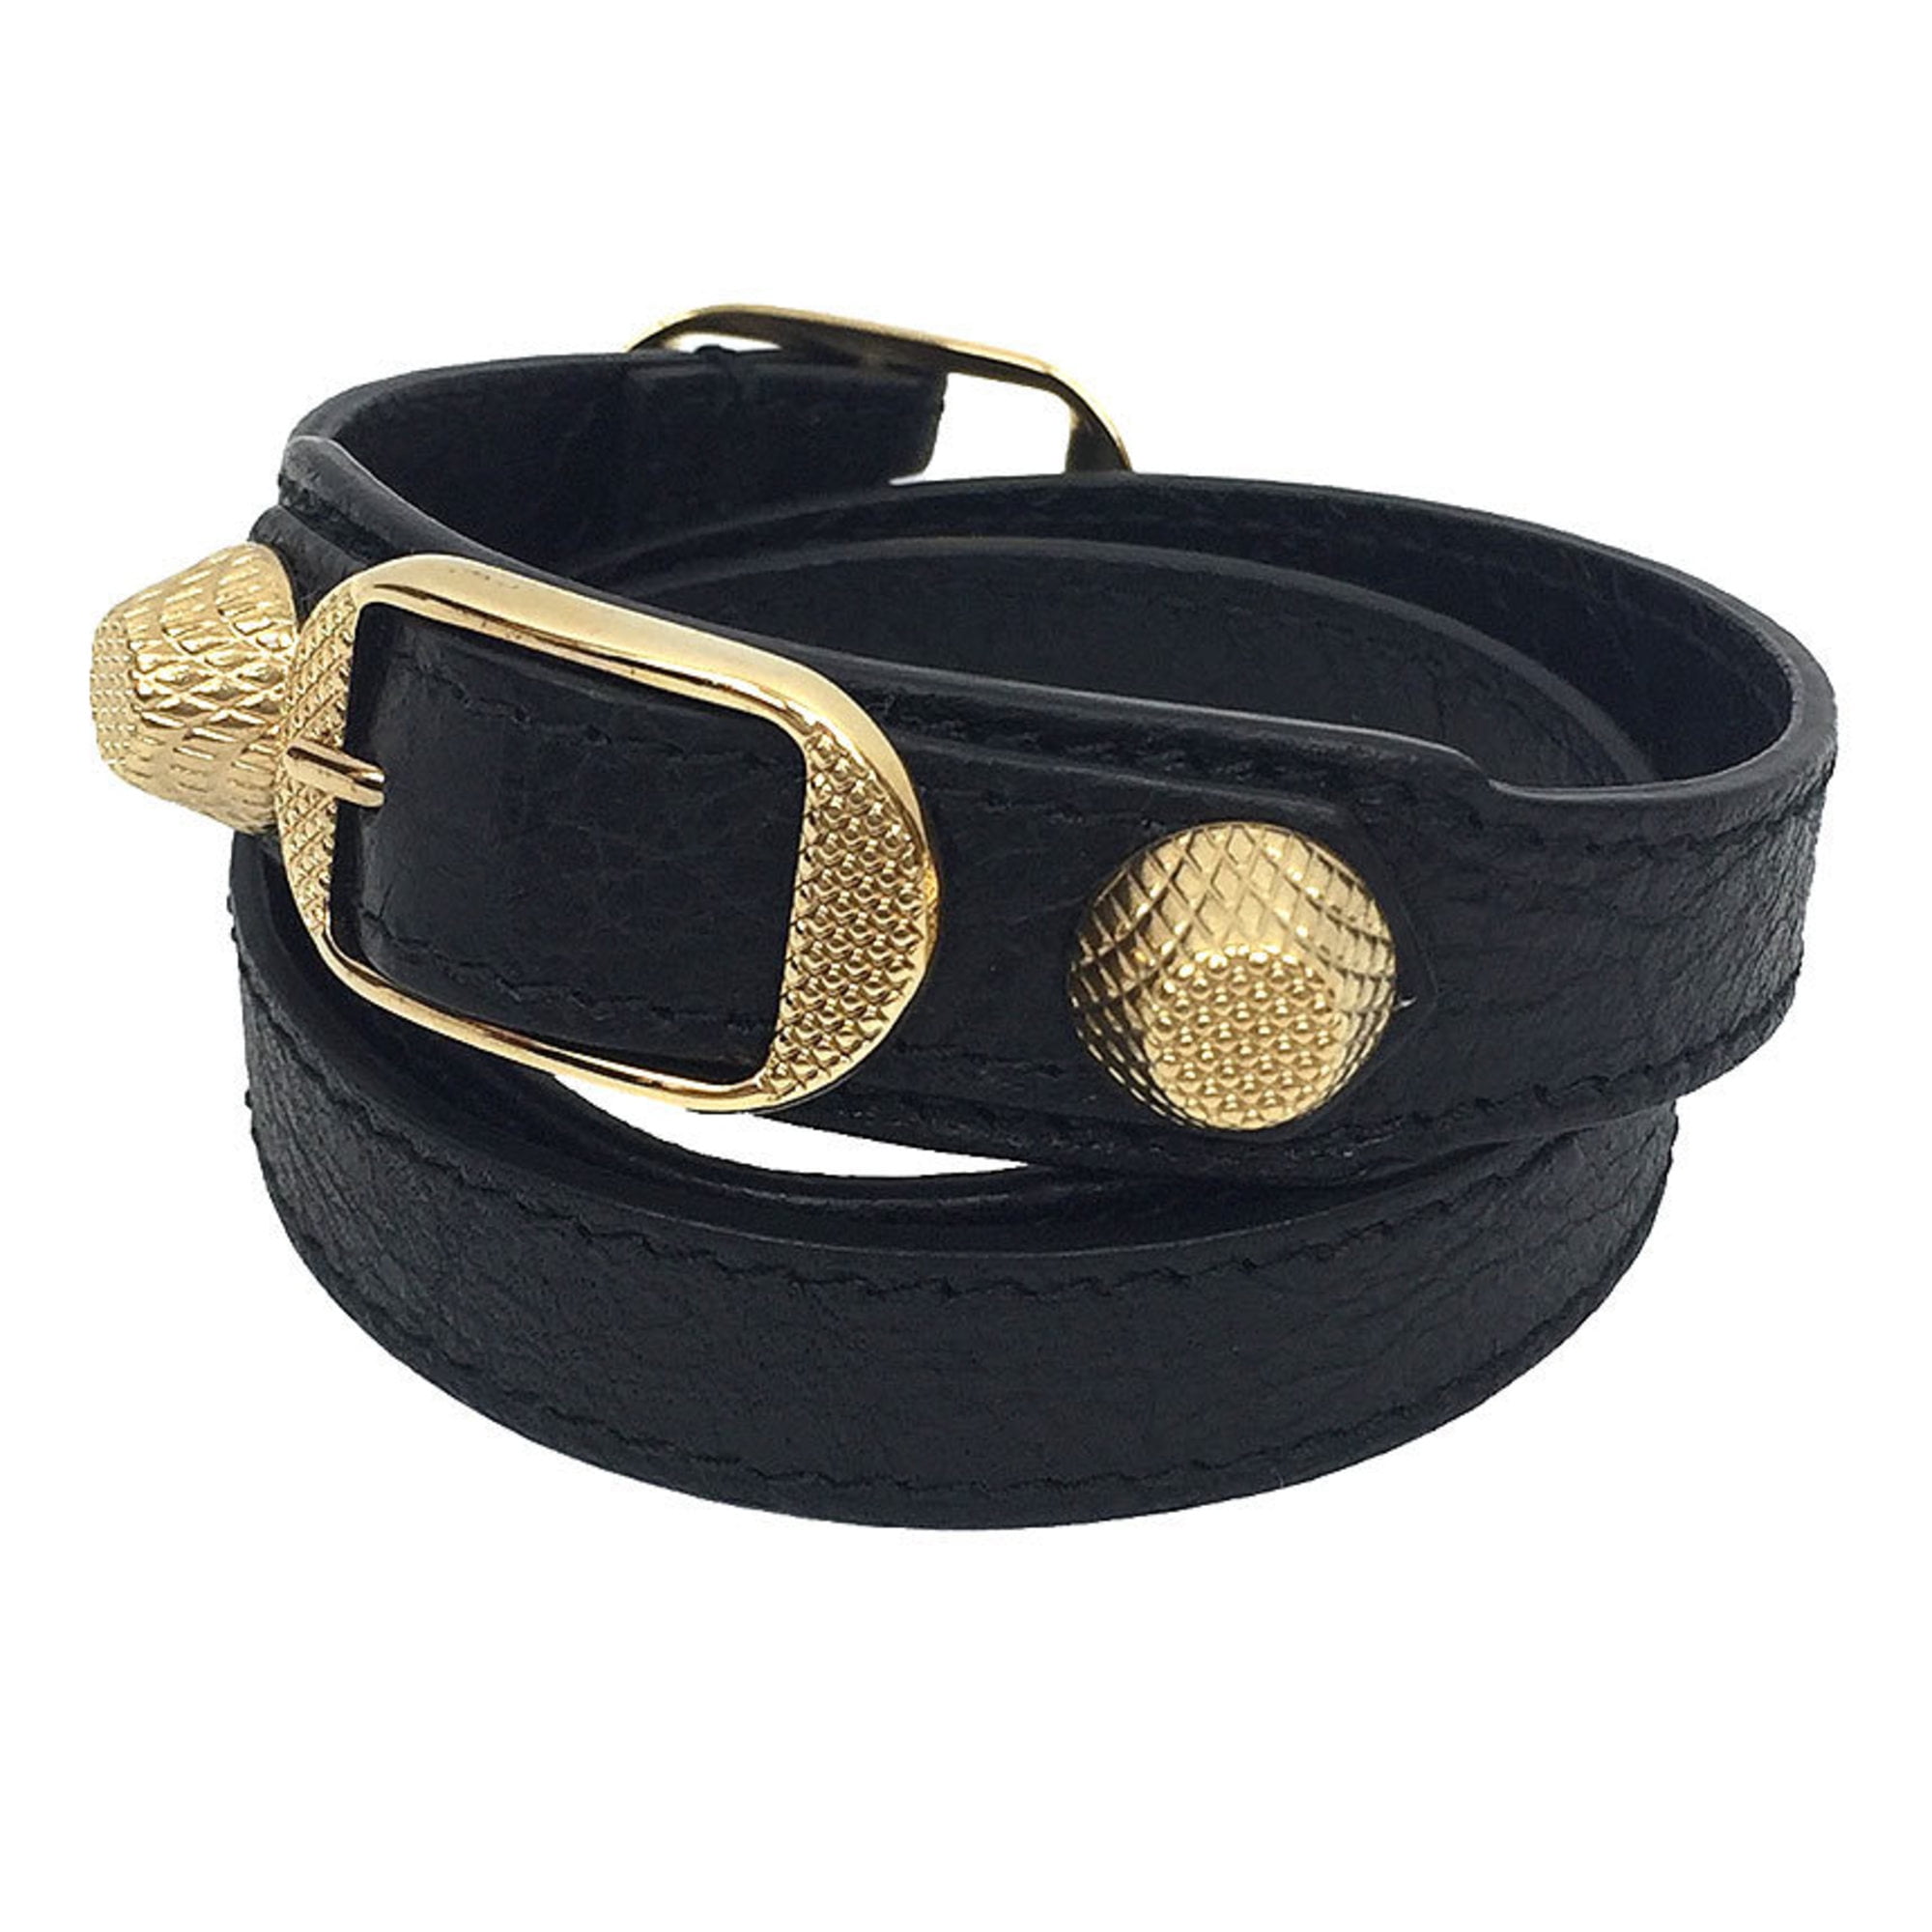 Authenticated Used Bracelet 236345 Leather Black Gold - Walmart.com